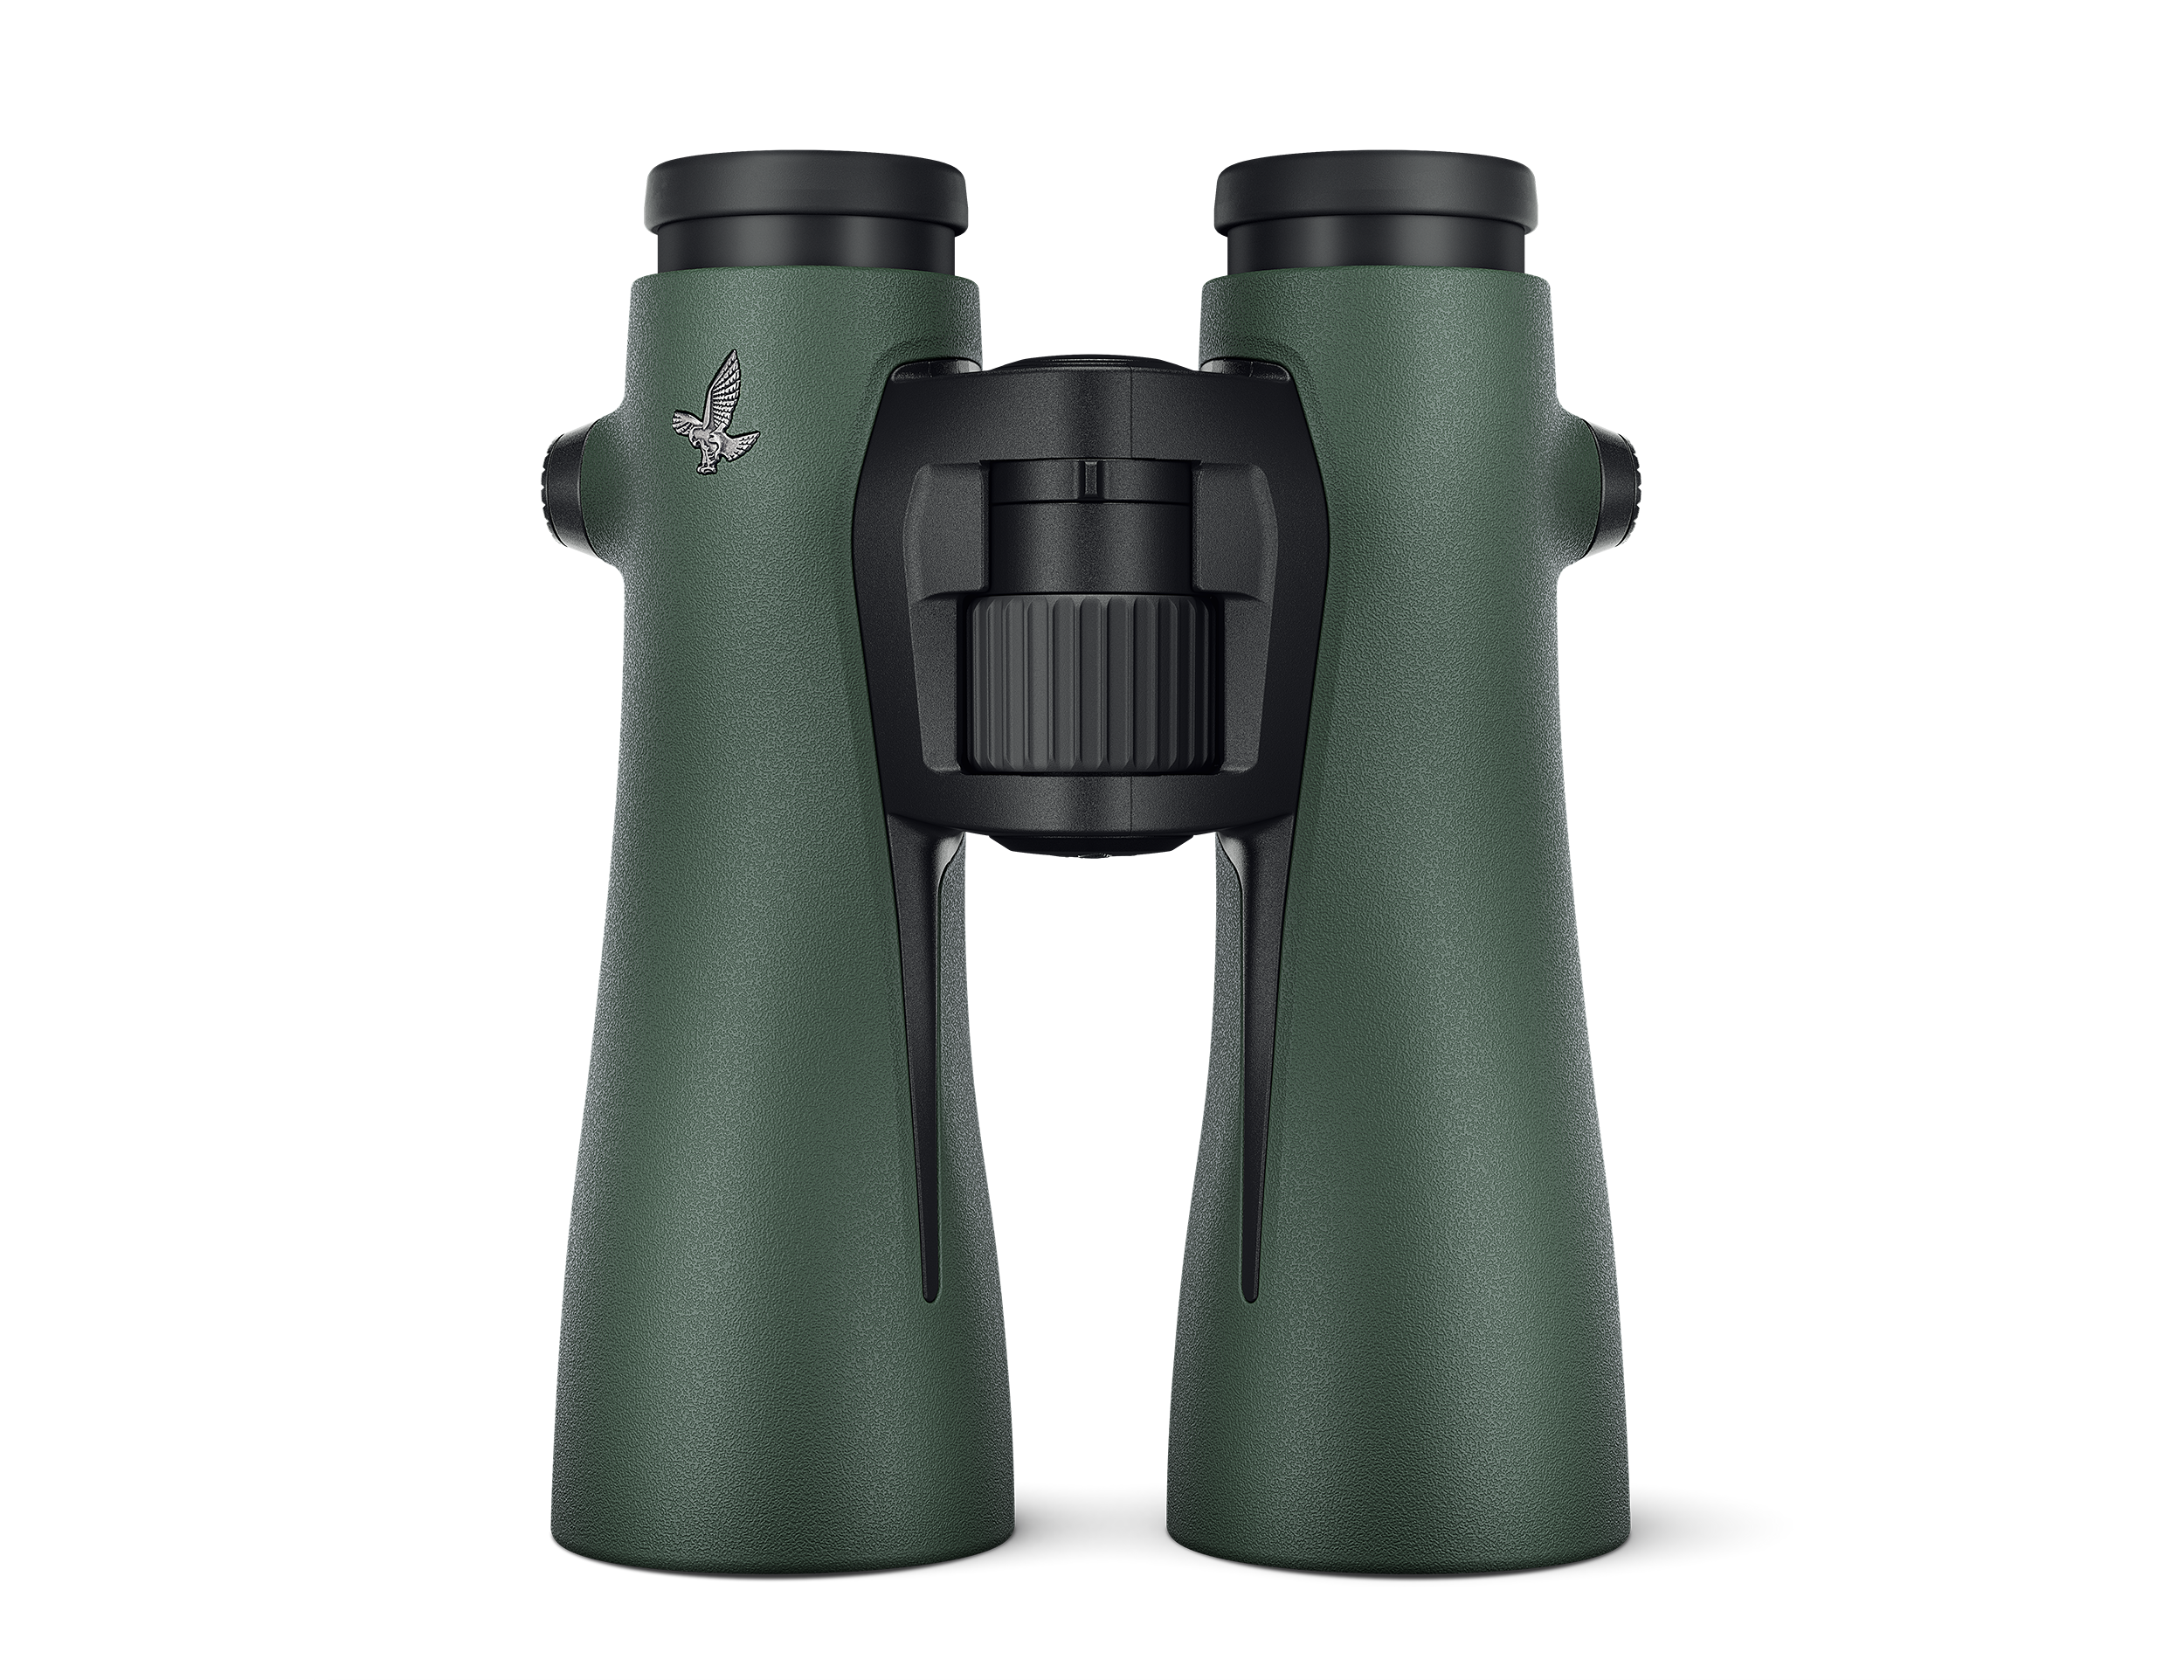 SWAROVSKI OPTIK NL Pure binoculars